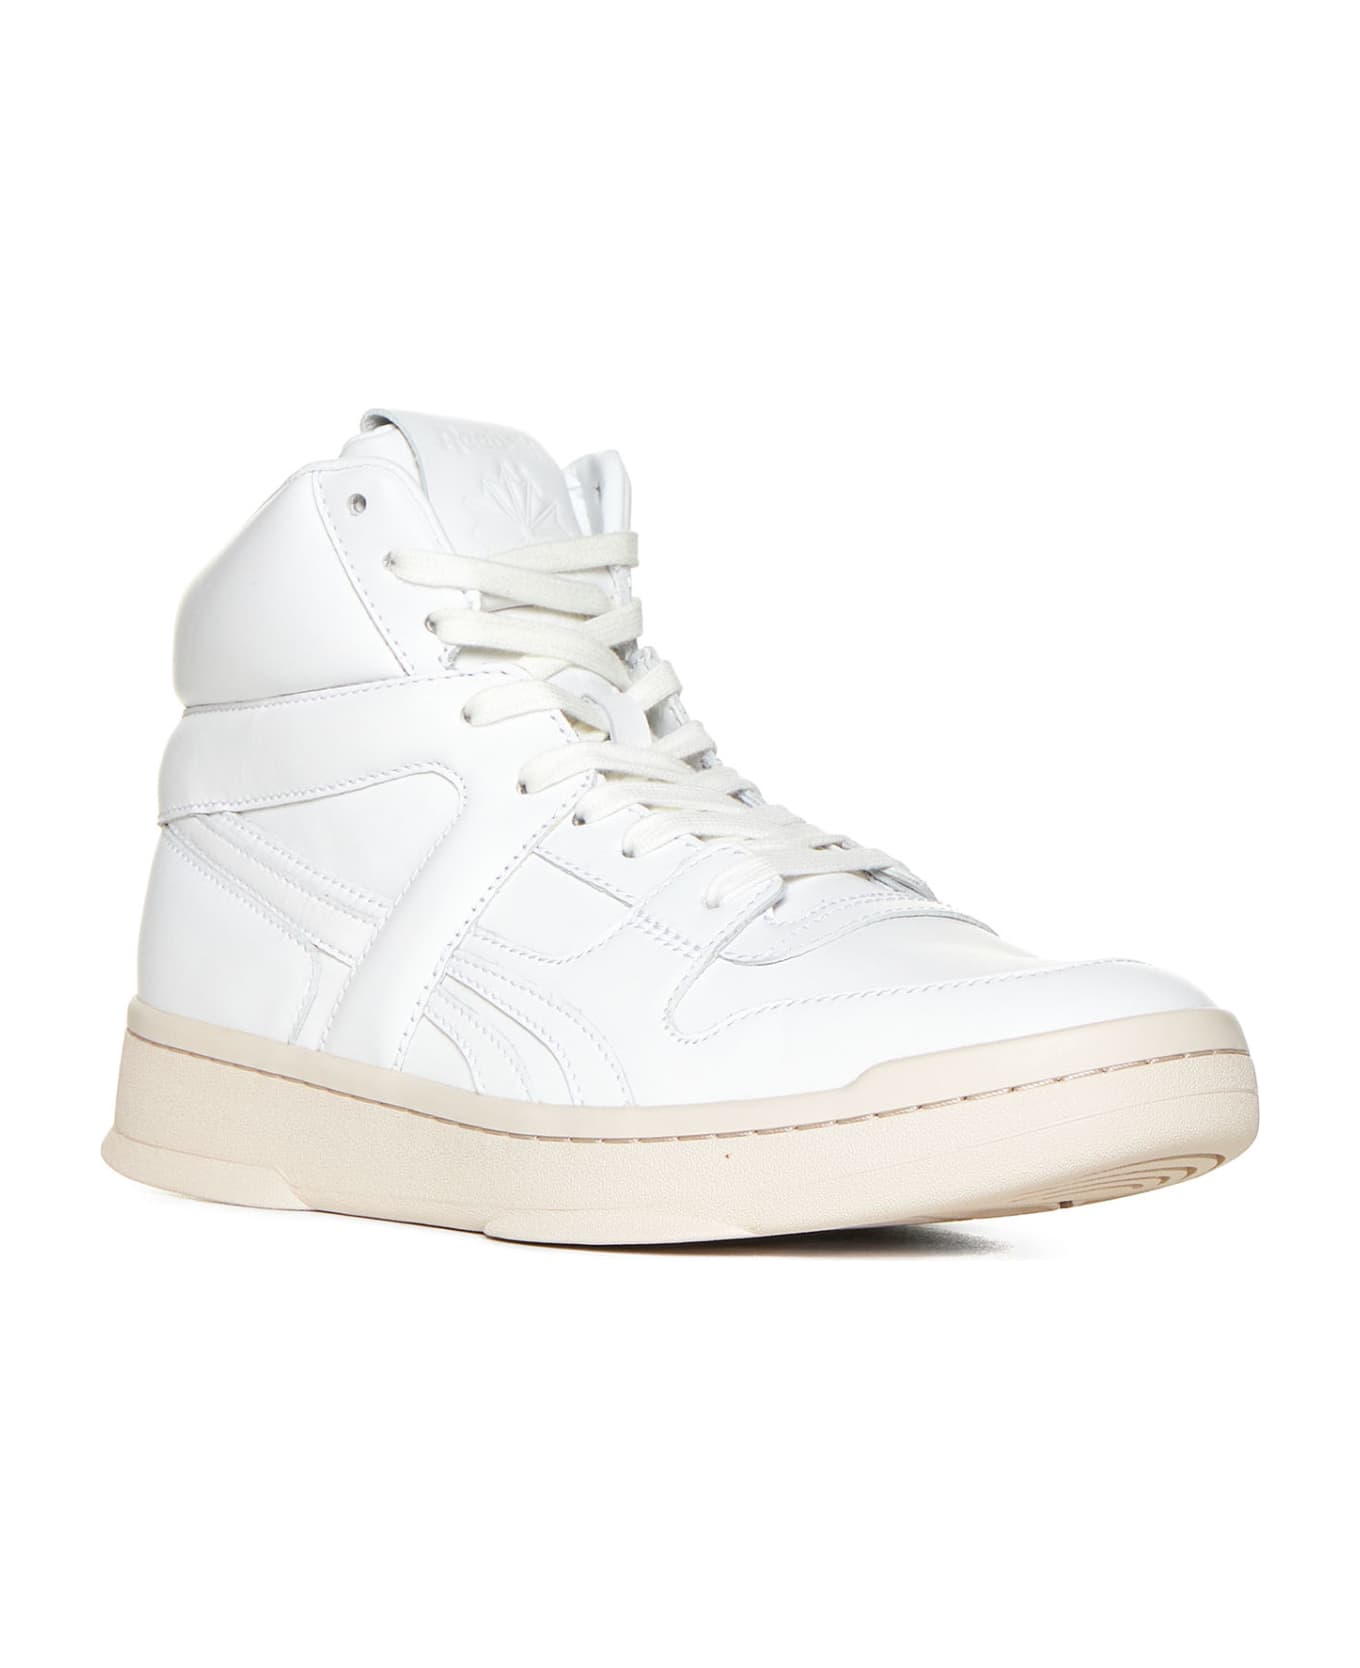 Reebok Sneakers - White lthr